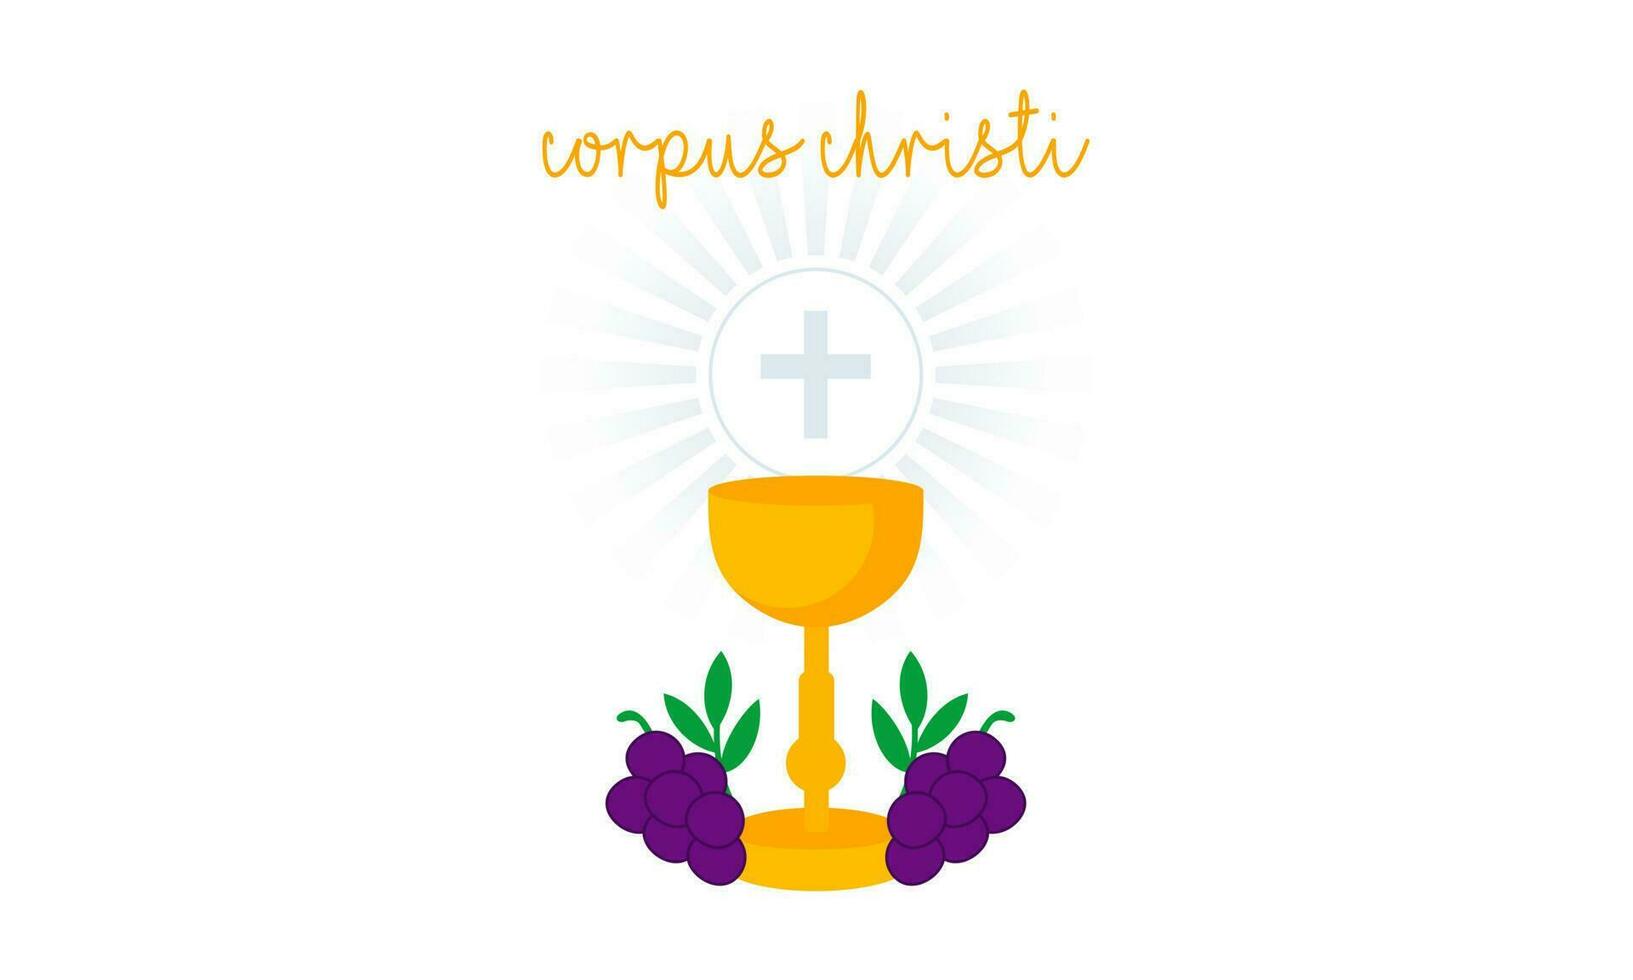 Corpus christi catholic religious holiday vector